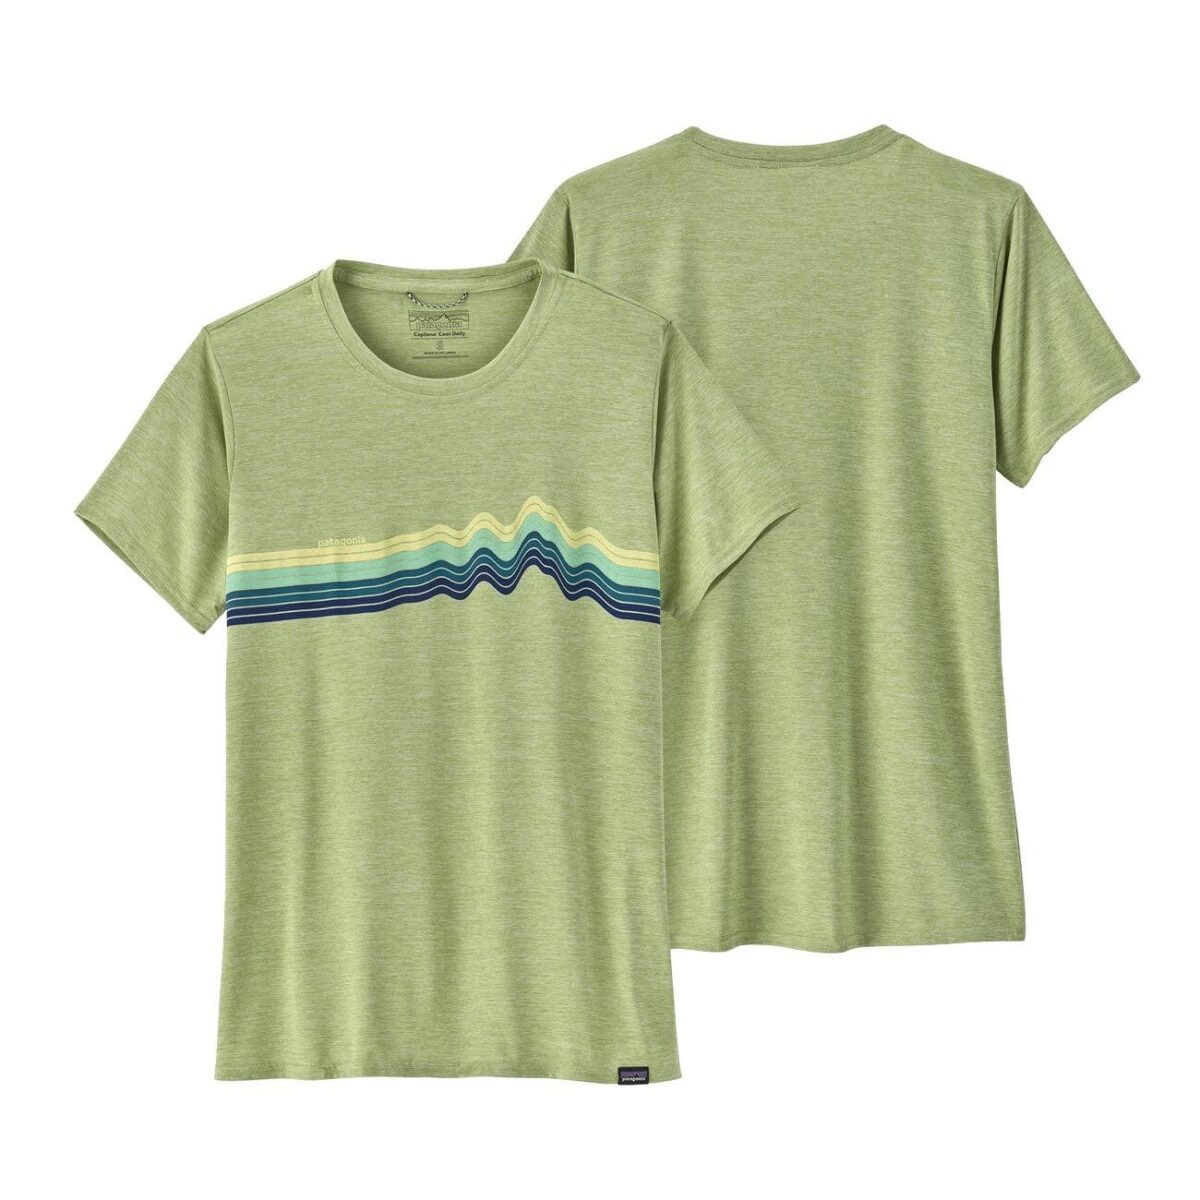 PATAGONIA WOMEN'S CAPILENE COOL DAILY GRAPHIC T-SHIRT maglietta sintetica sport donna